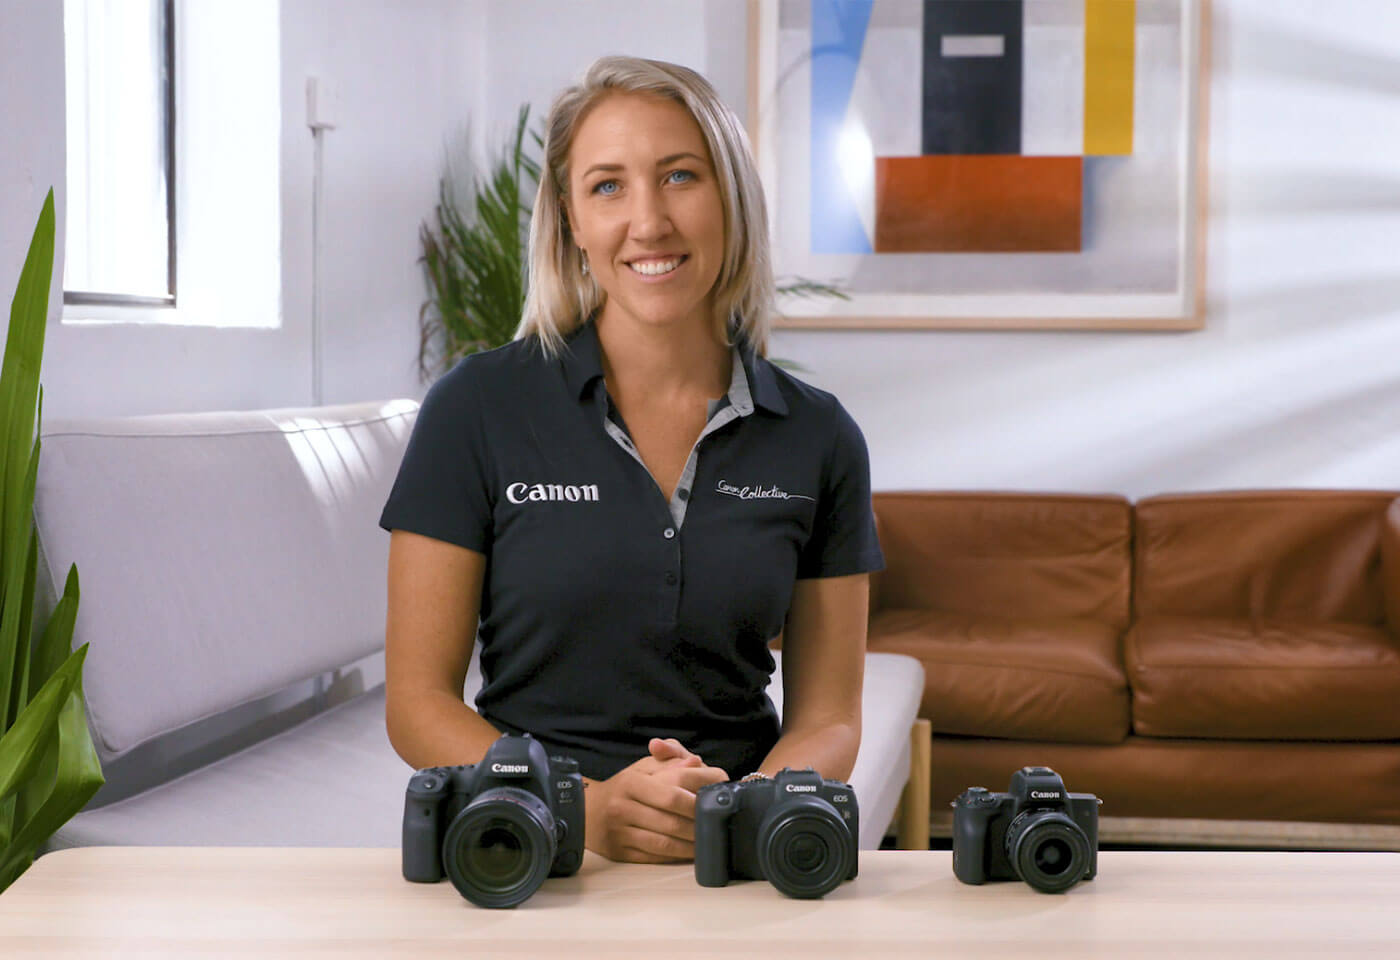 Collective Ambassador Jenn Cooper comparing EOS R, EOS M and DSLR cameras